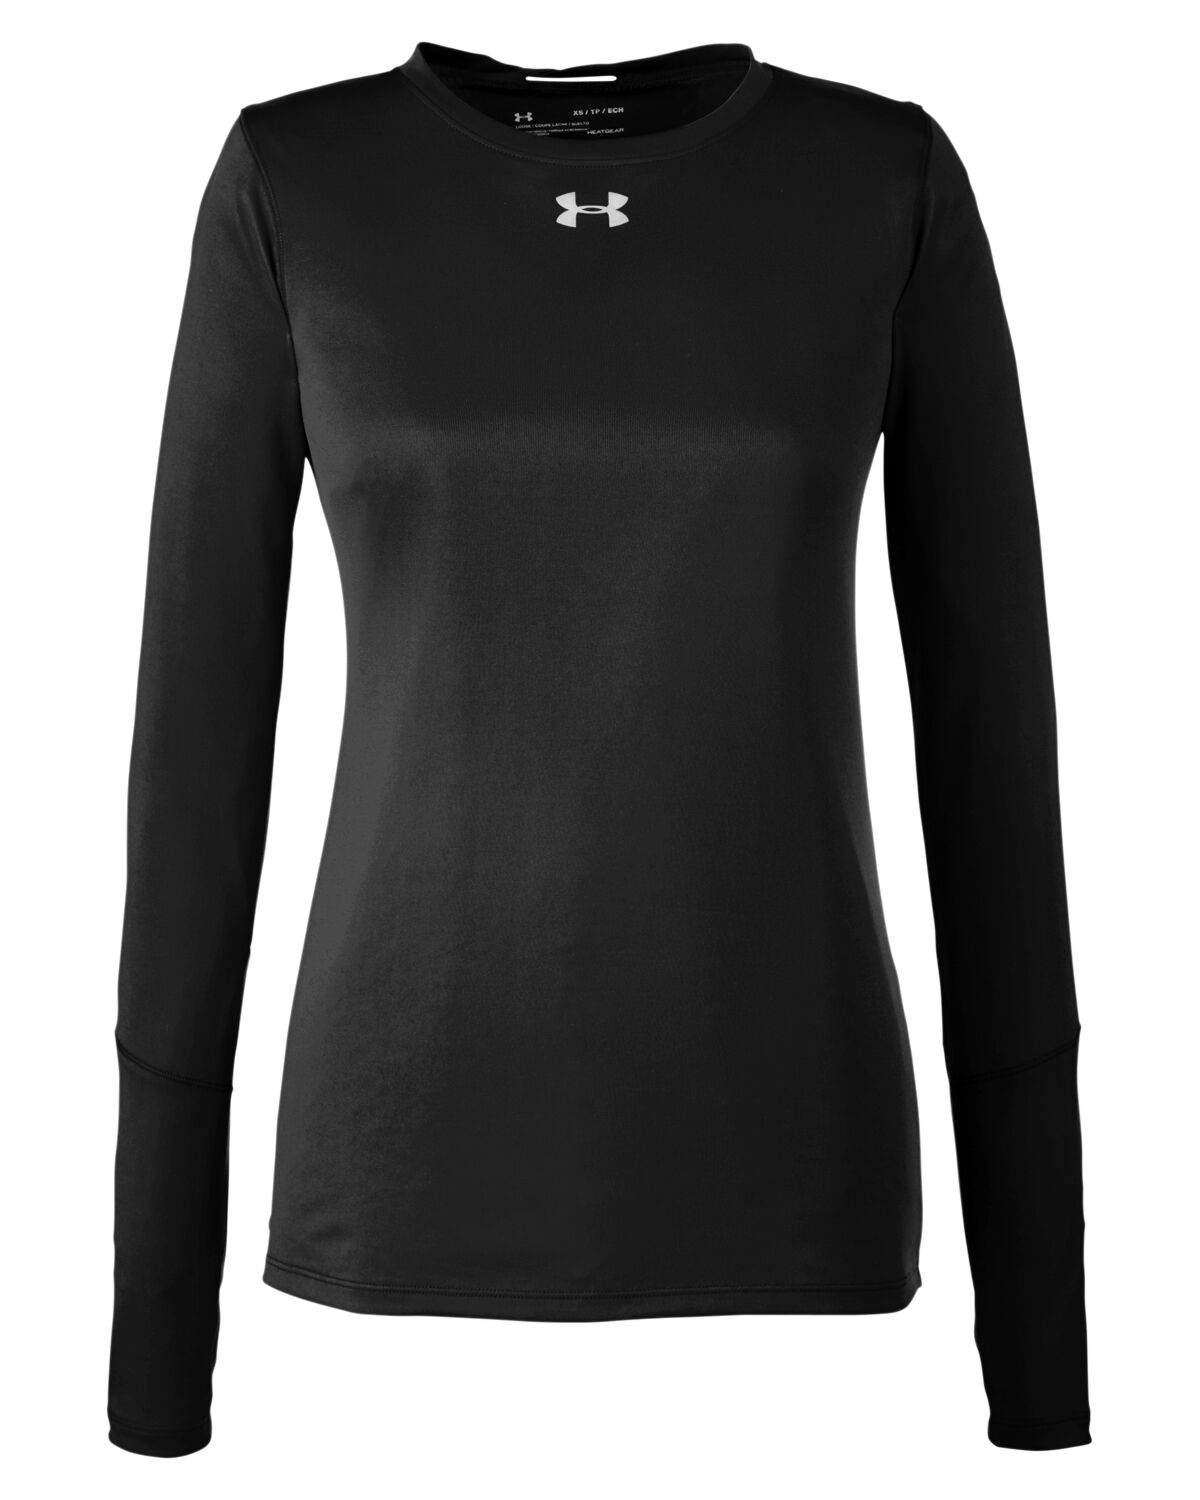 Branded Under Armour Ladies’ Long-Sleeve Locker T-Shirt 2.0 Black/Metallic Silver